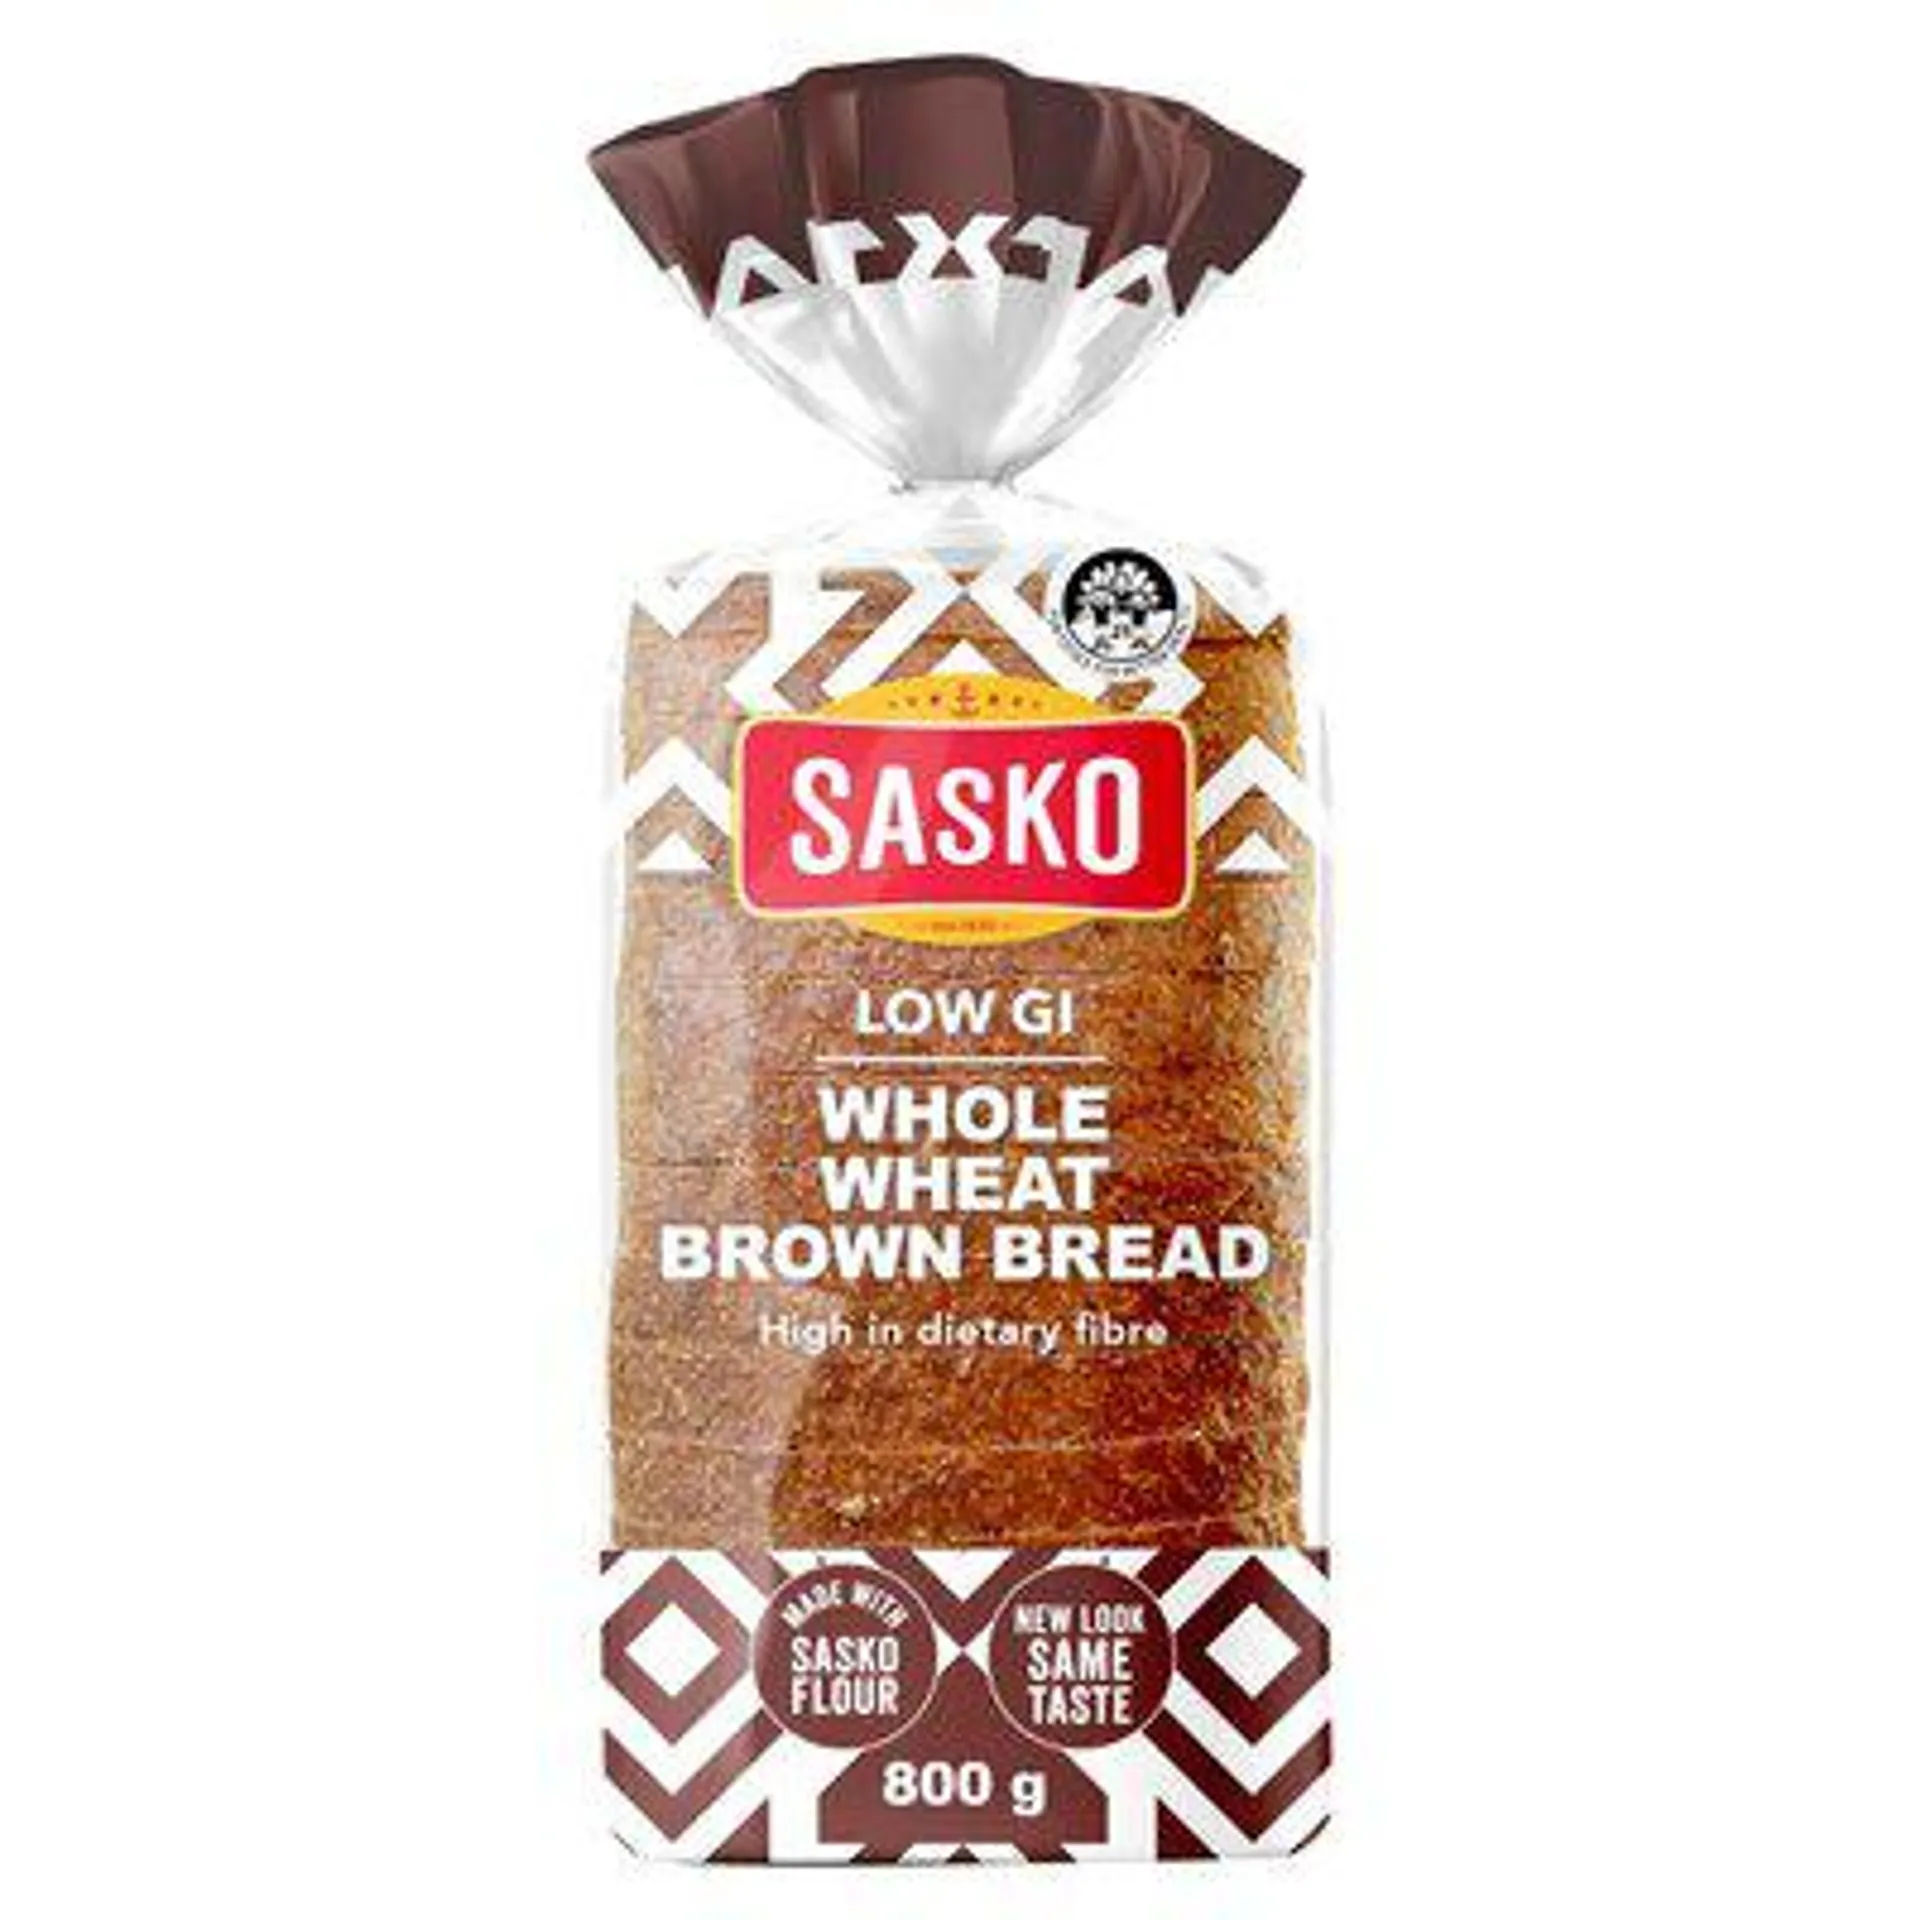 Sasko Low Gi Dumpy Whole Wheat Brown Bread 800g